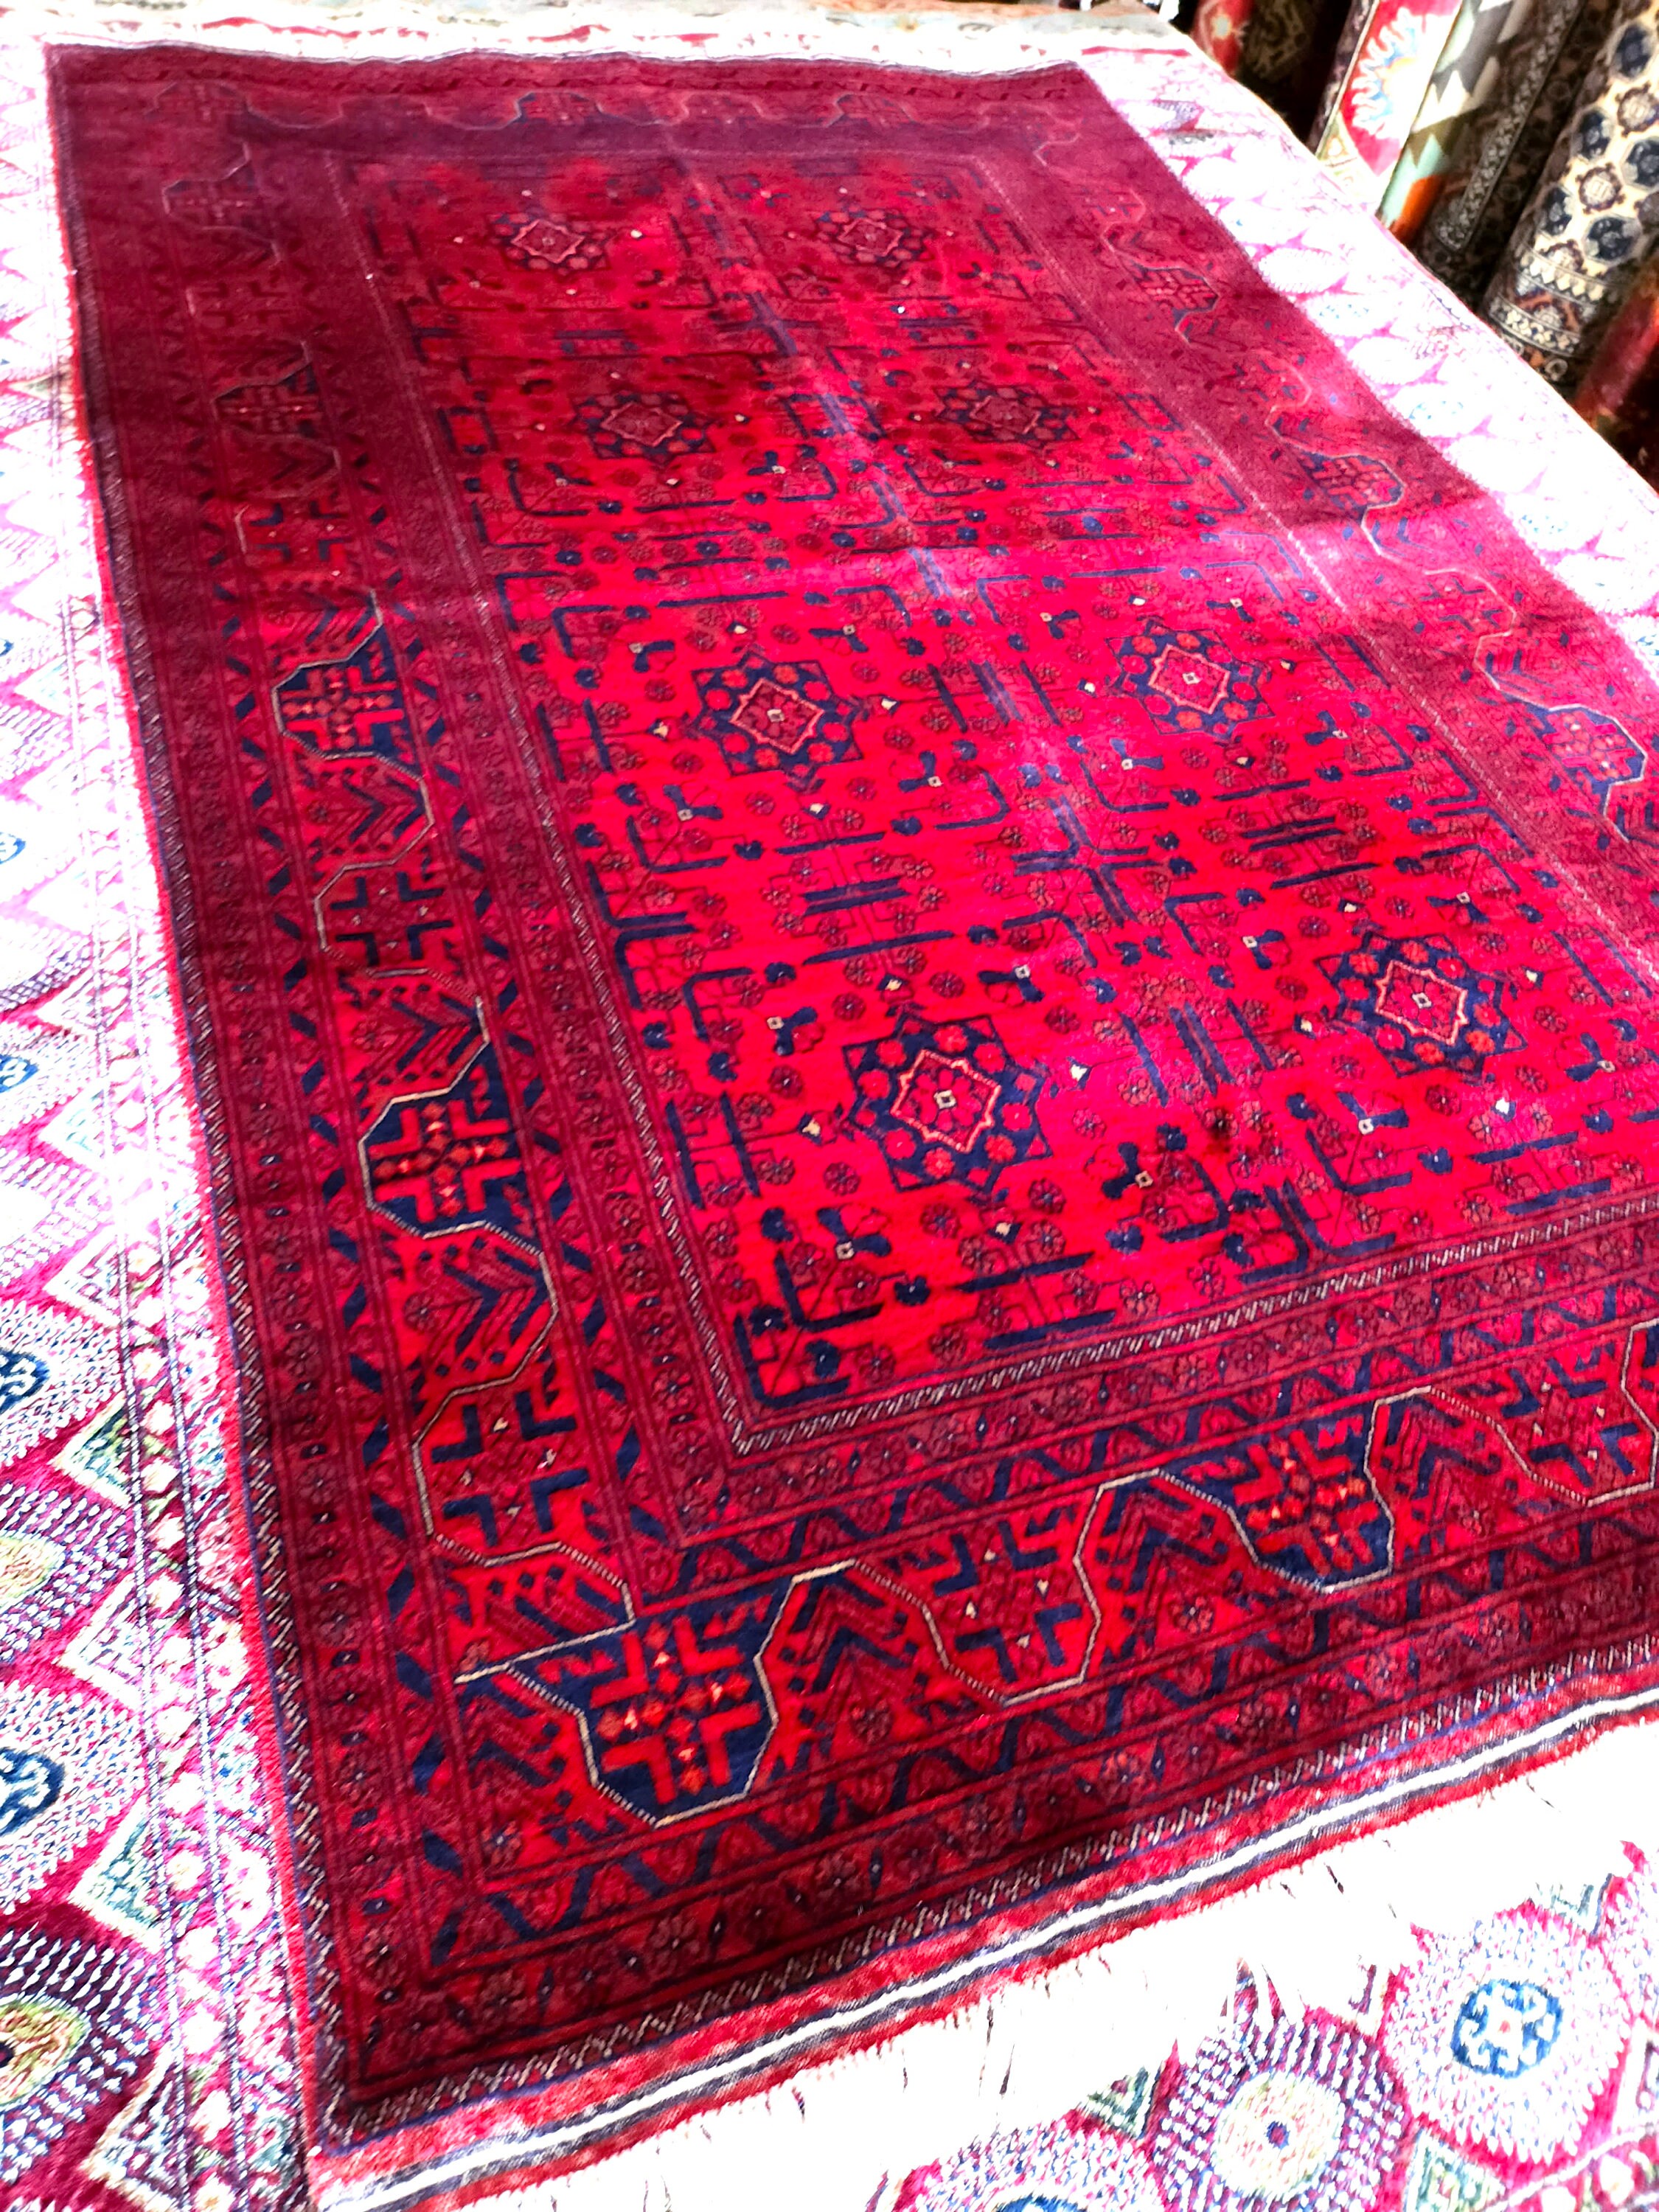 Belgique afghan high quality double knotted handmade rug merino wool rug, turkmen rug, area rug, elegant red rug, home decor, afghan red rug